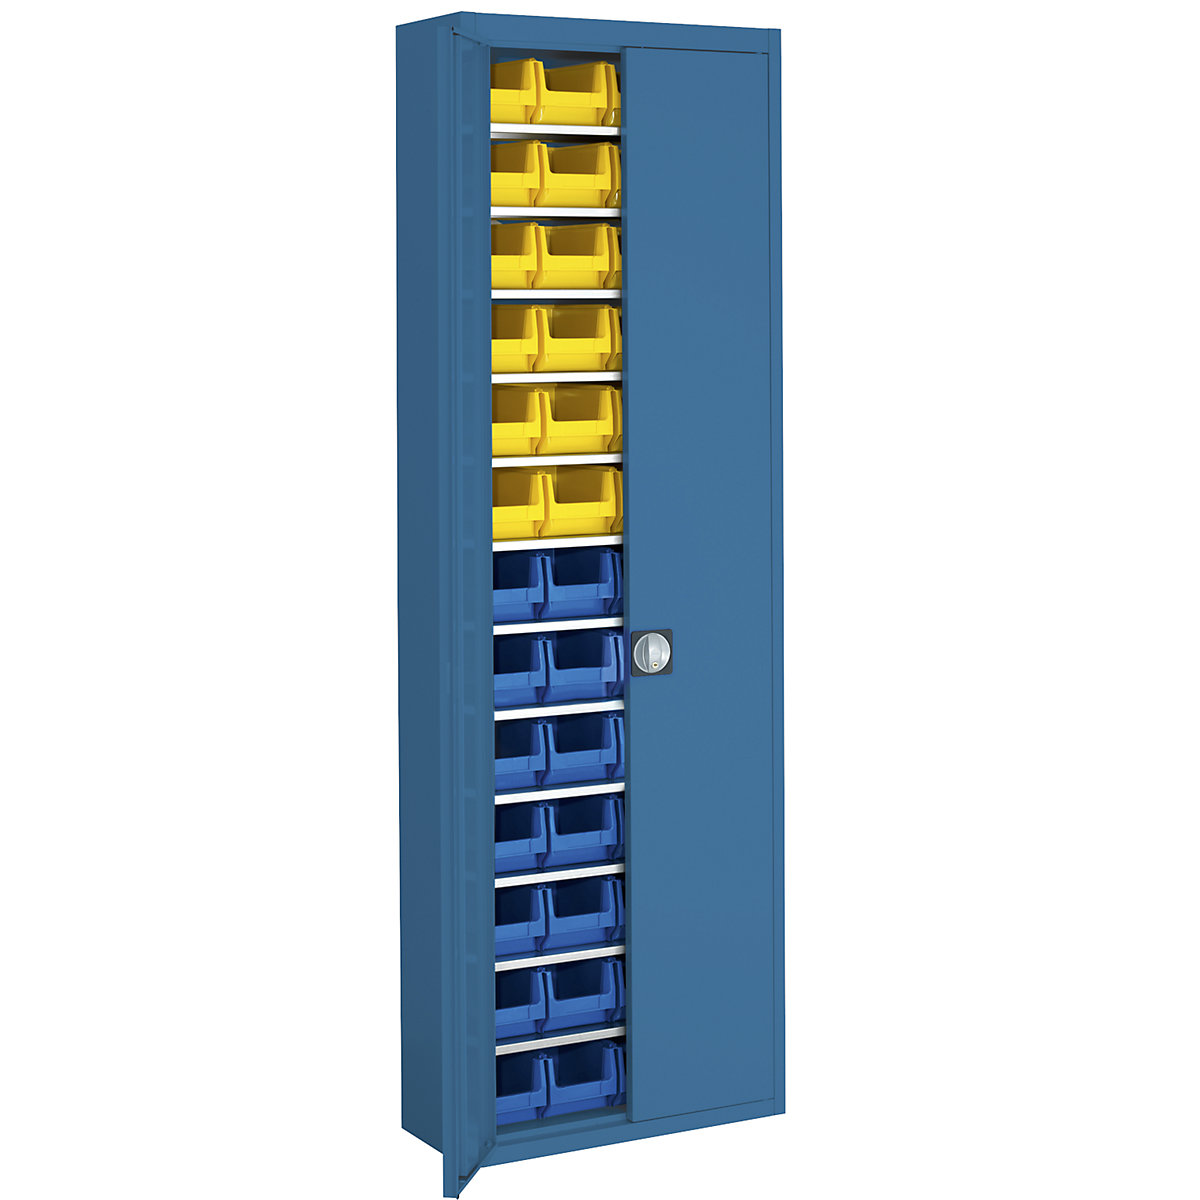 Storage cupboard with open fronted storage bins – mauser, HxWxD 2150 x 680 x 280 mm, single colour, blue, 52 bins-4